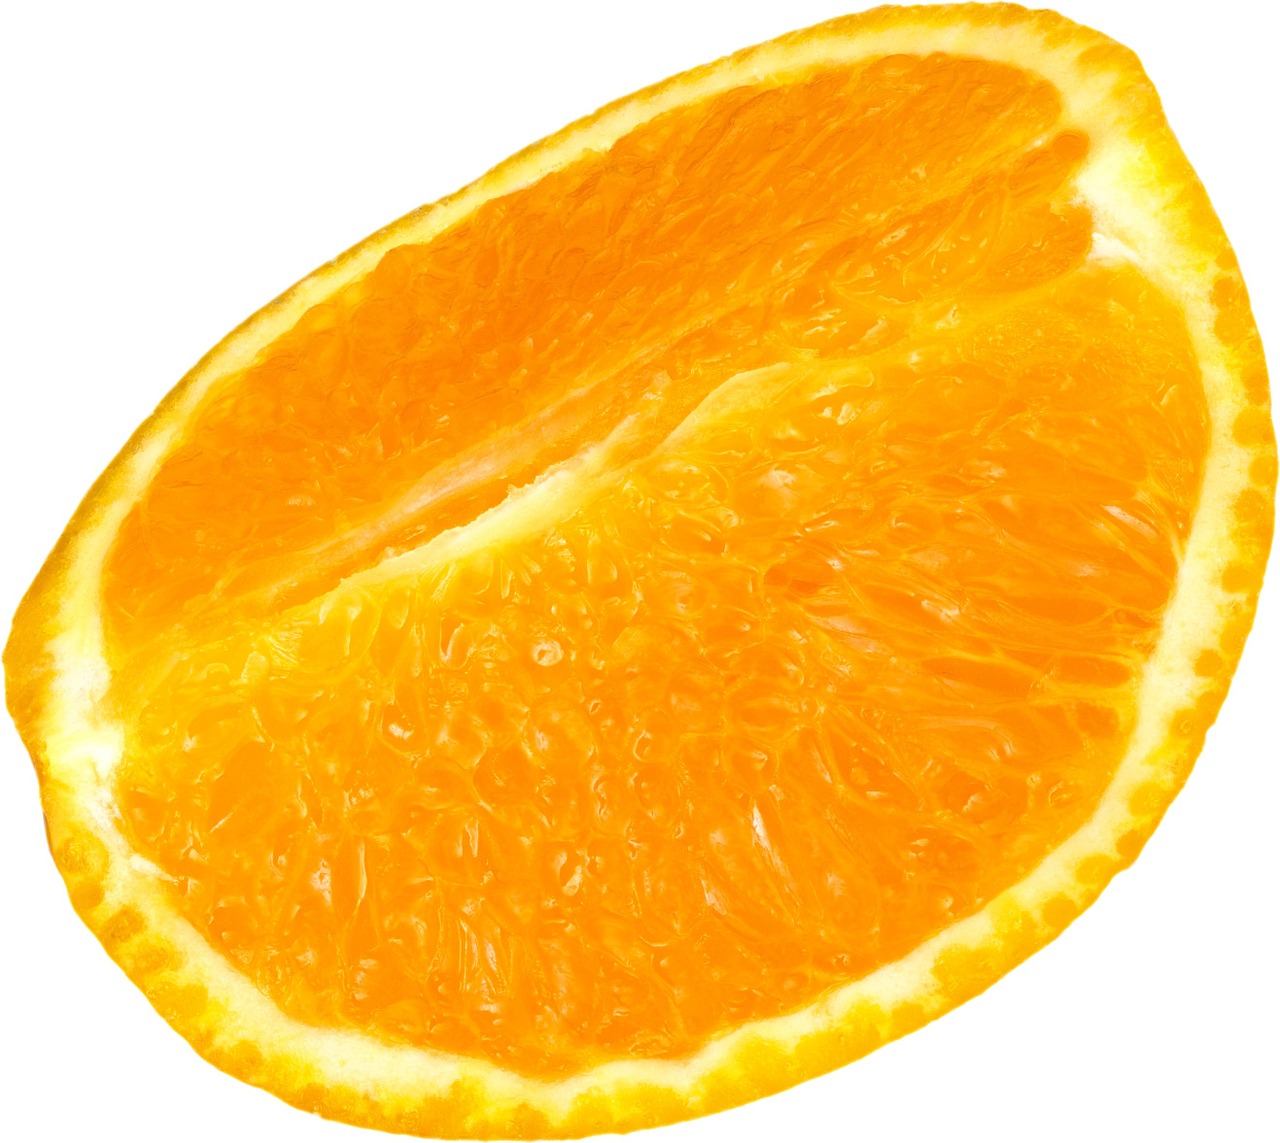 orange fruit quarter slice sliced free photo